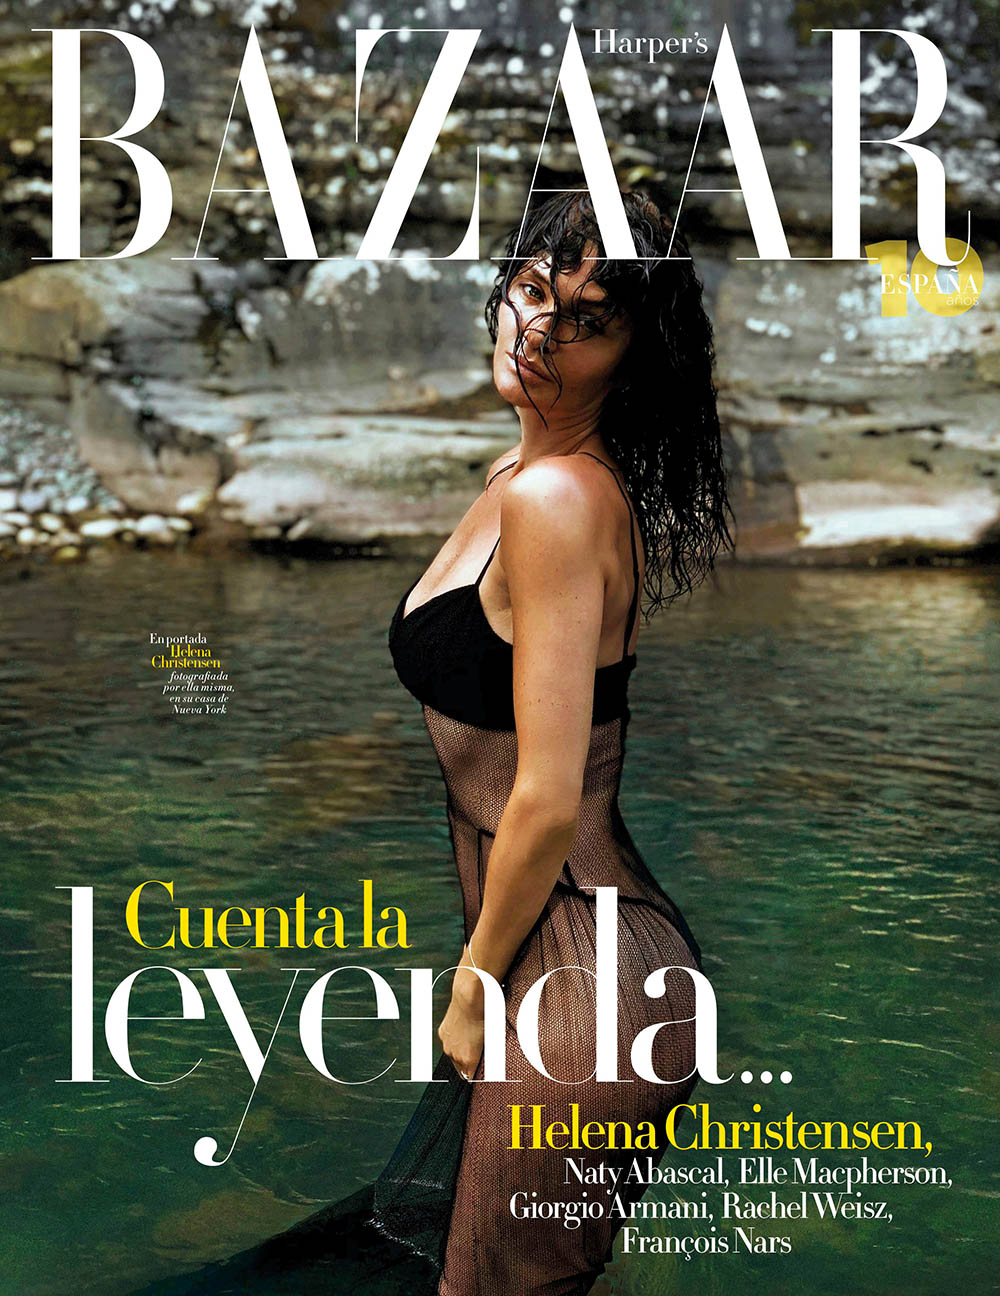 Helena Christensen covers Harper’s Bazaar Spain July August 2020 by Helena Christensen